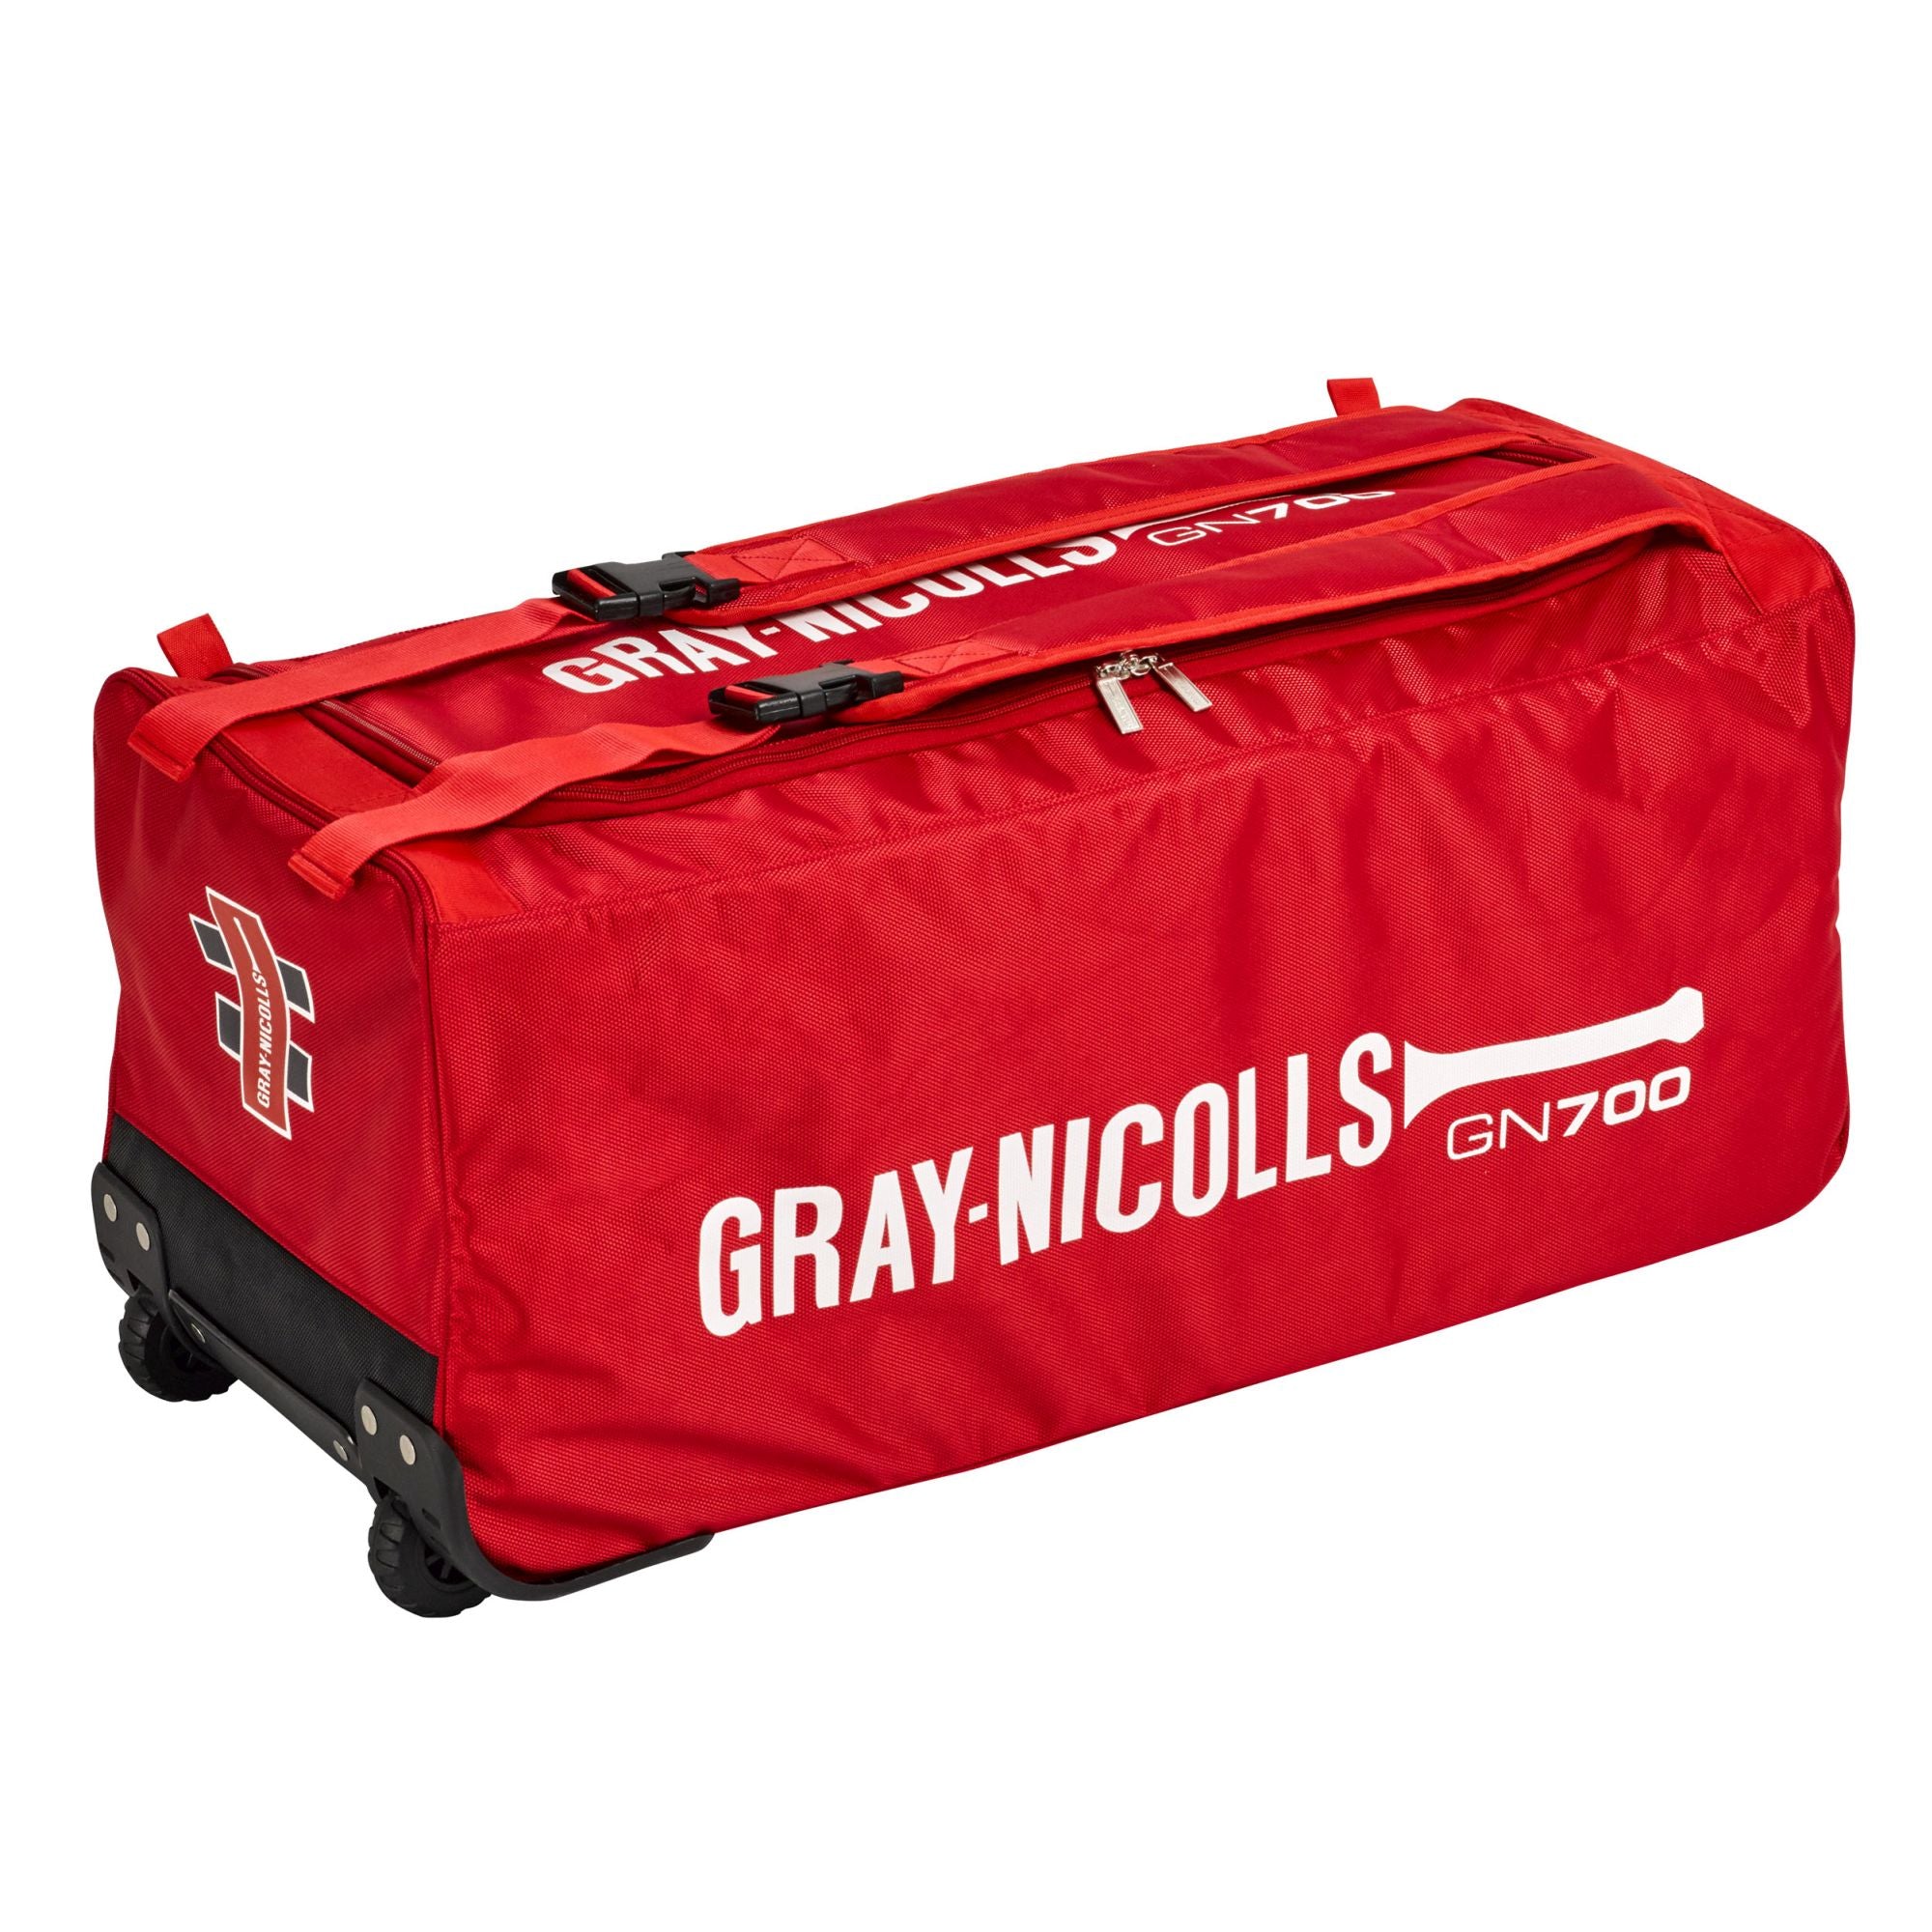 Gray Nicolls GN 700 Cricket Wheel Bag